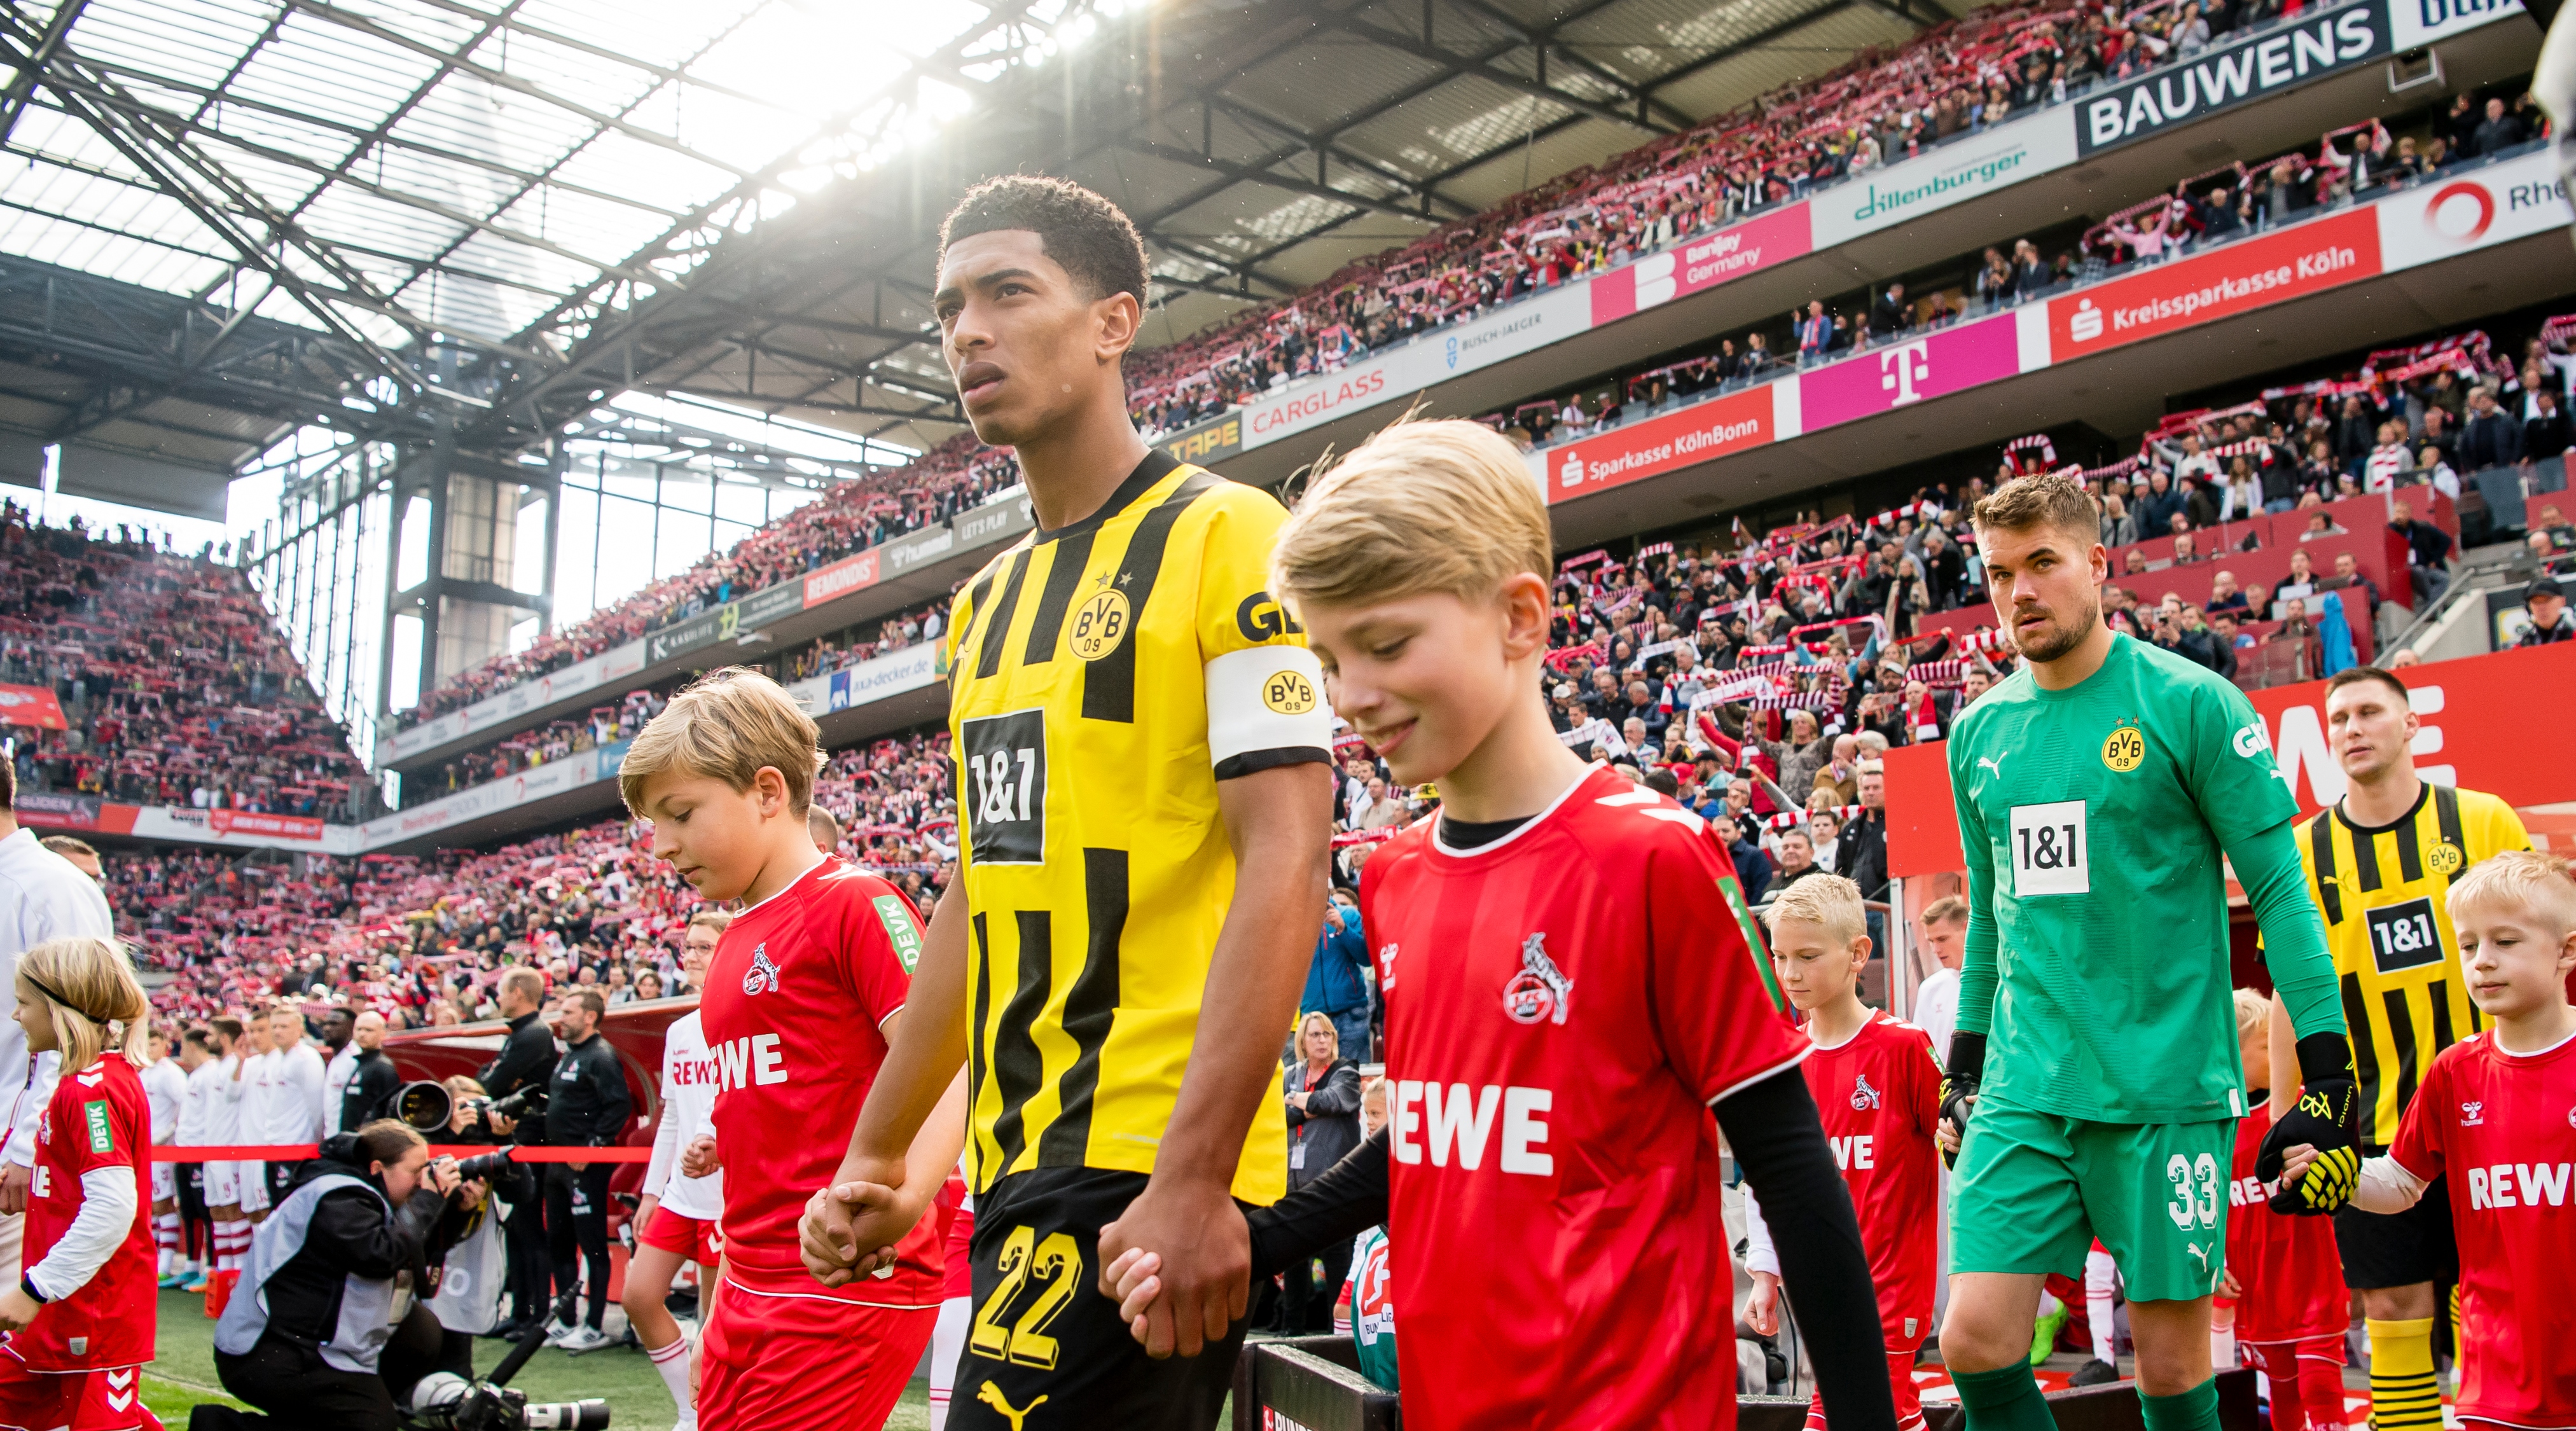 Borussia Dortmund midfielder Jude Bellingham leads his team as captain before the Bundesliga match between 1. FC Koln and Borussia Dortmund on October 1, 2022 at RheinEnergieStadion in Cologne, Germany